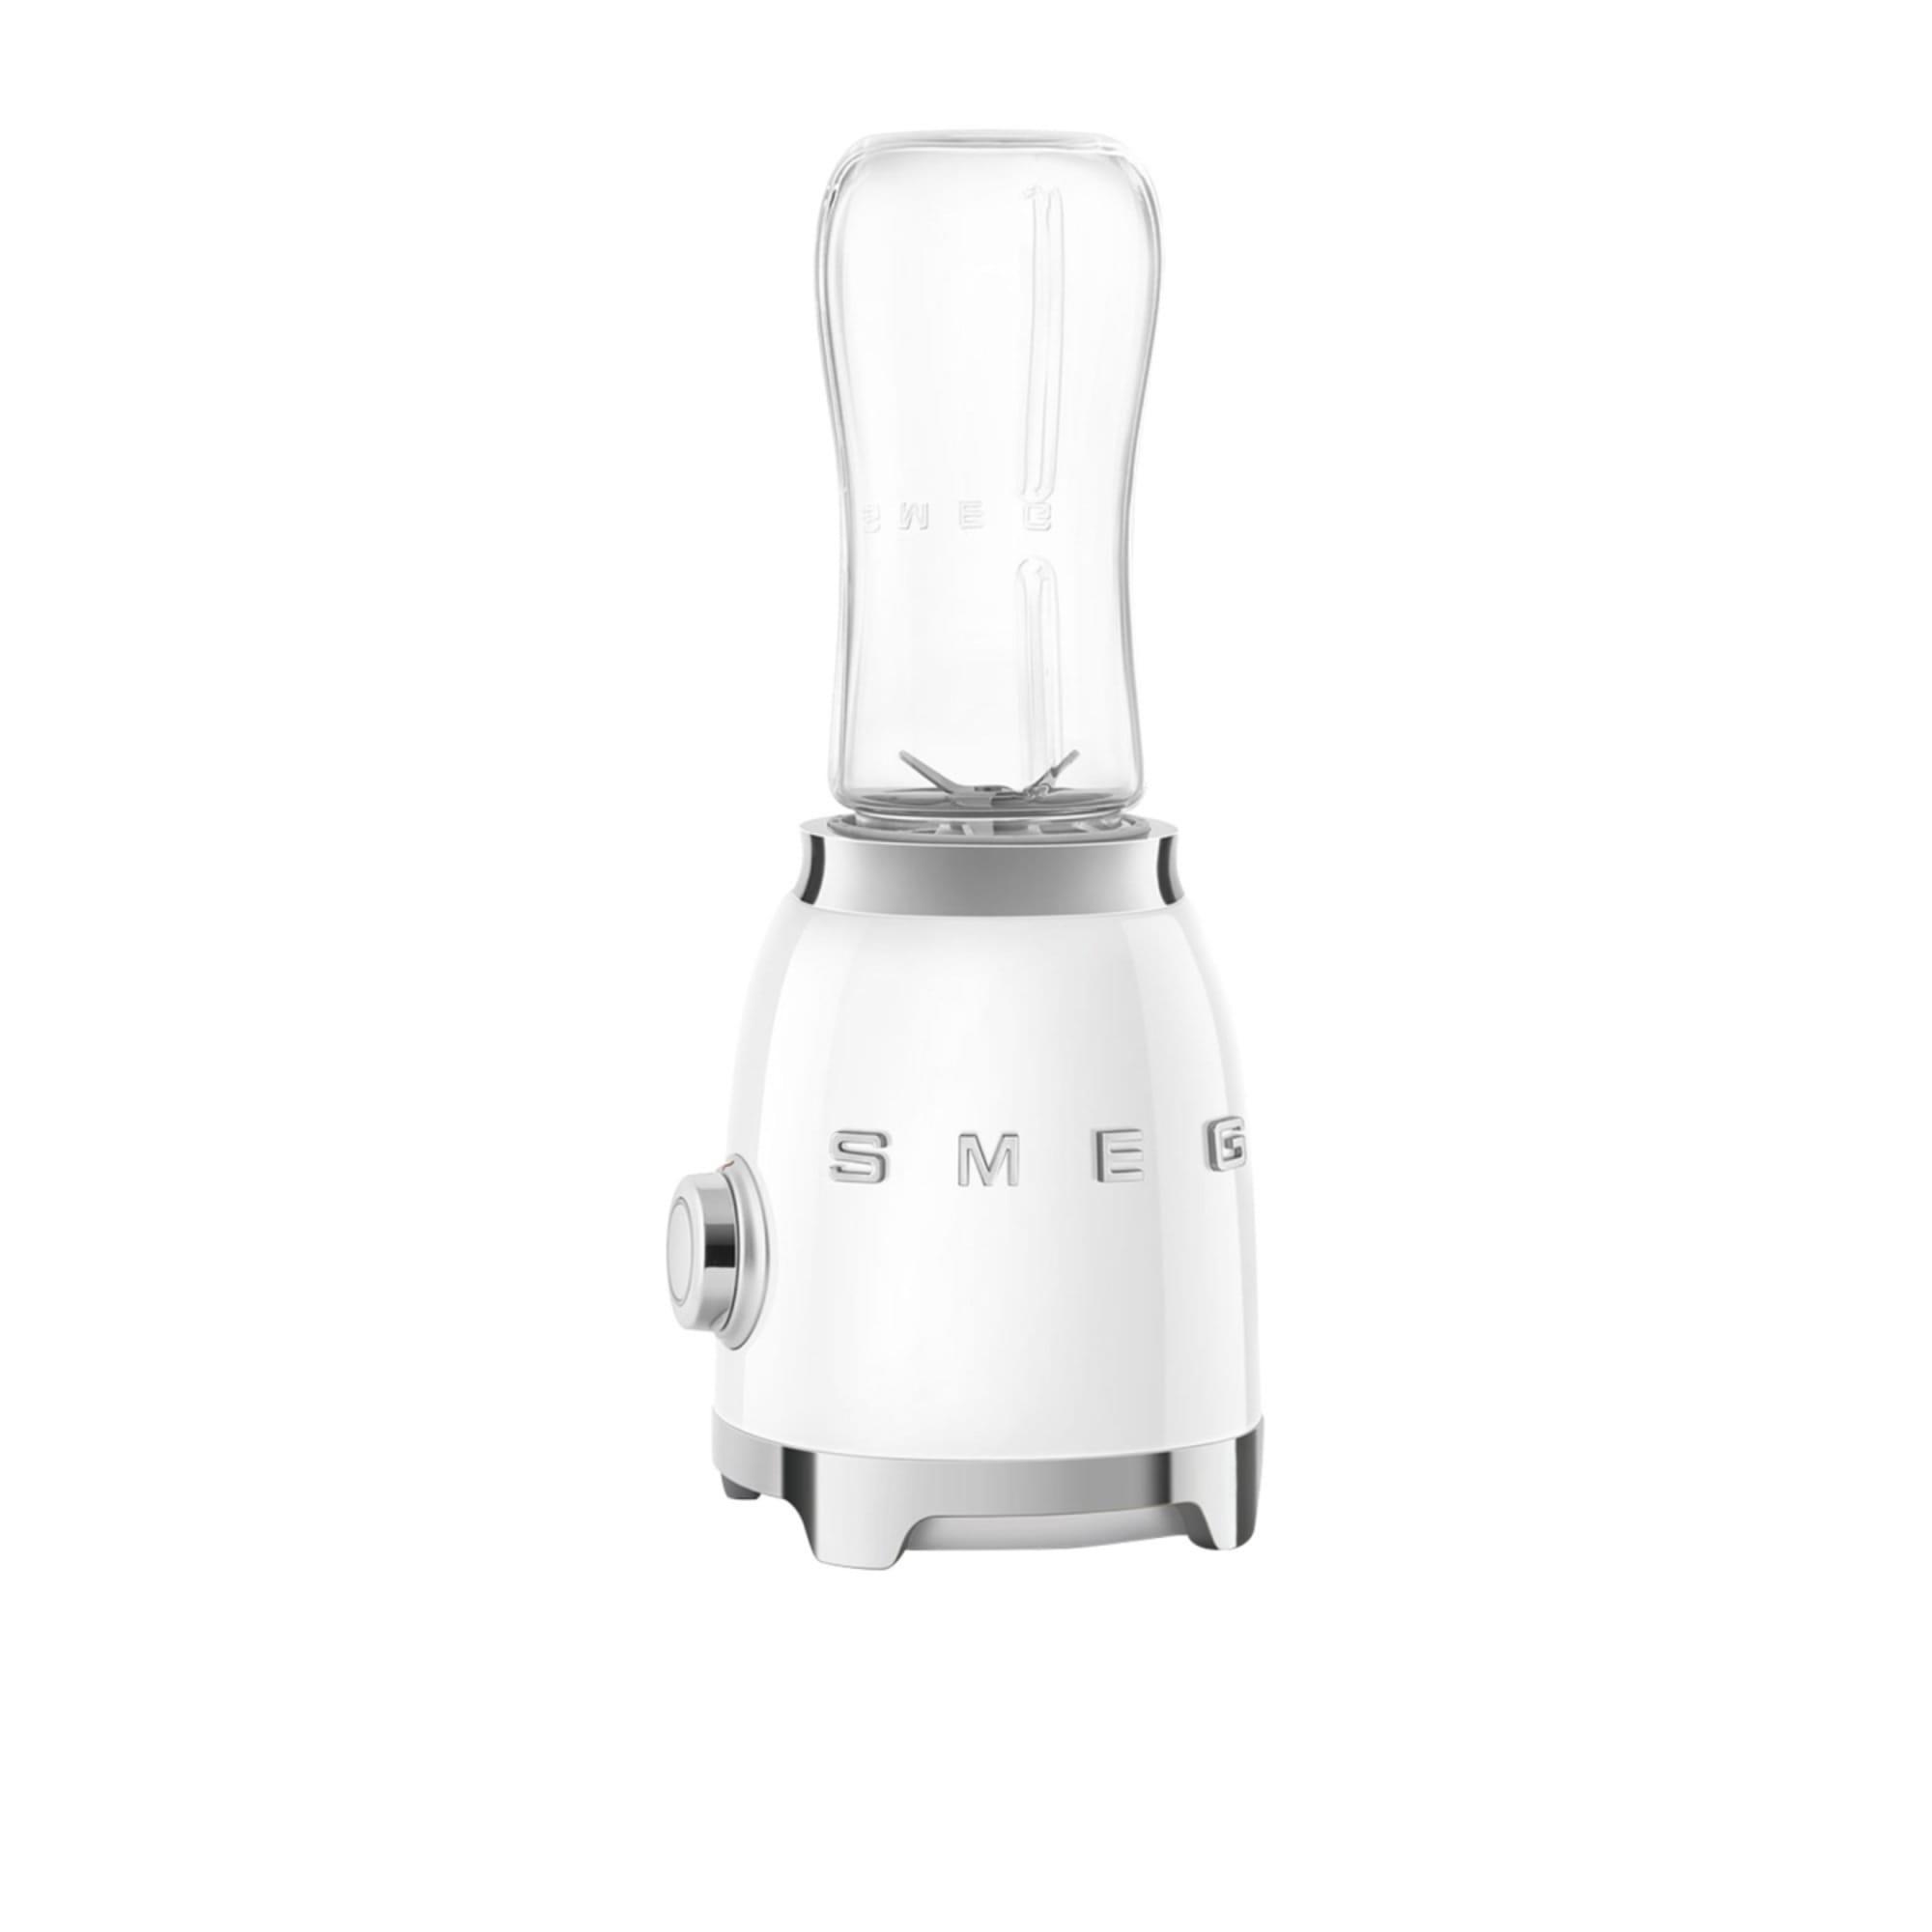 Smeg 50's Retro Style Mini Blender White Image 6